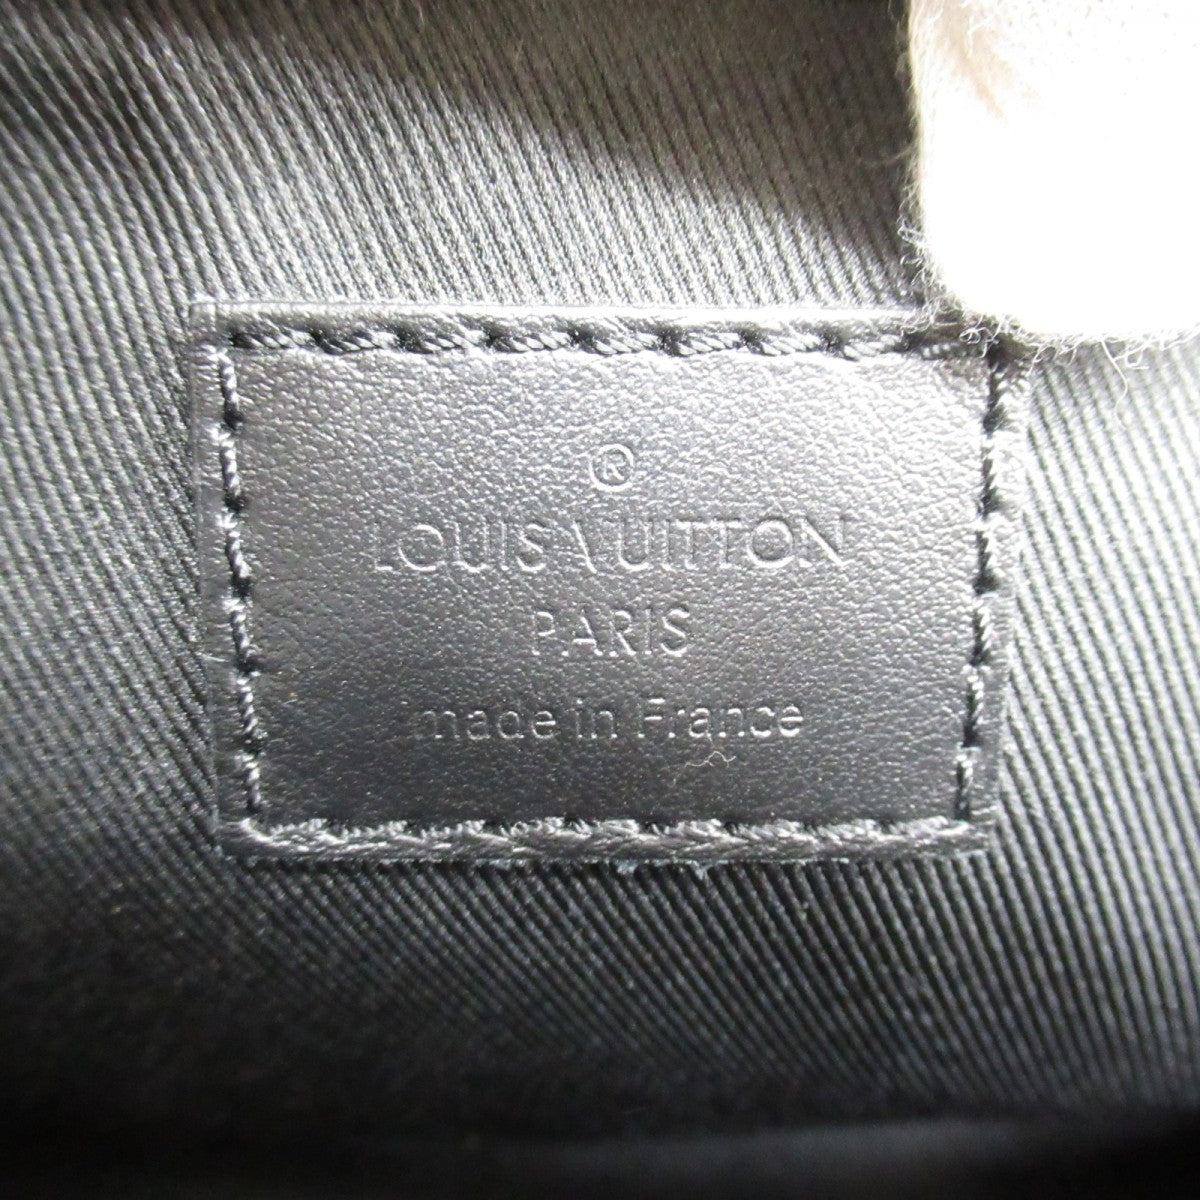 Shop Louis Vuitton CHRISTOPHER Christopher bumbag (M45337) by